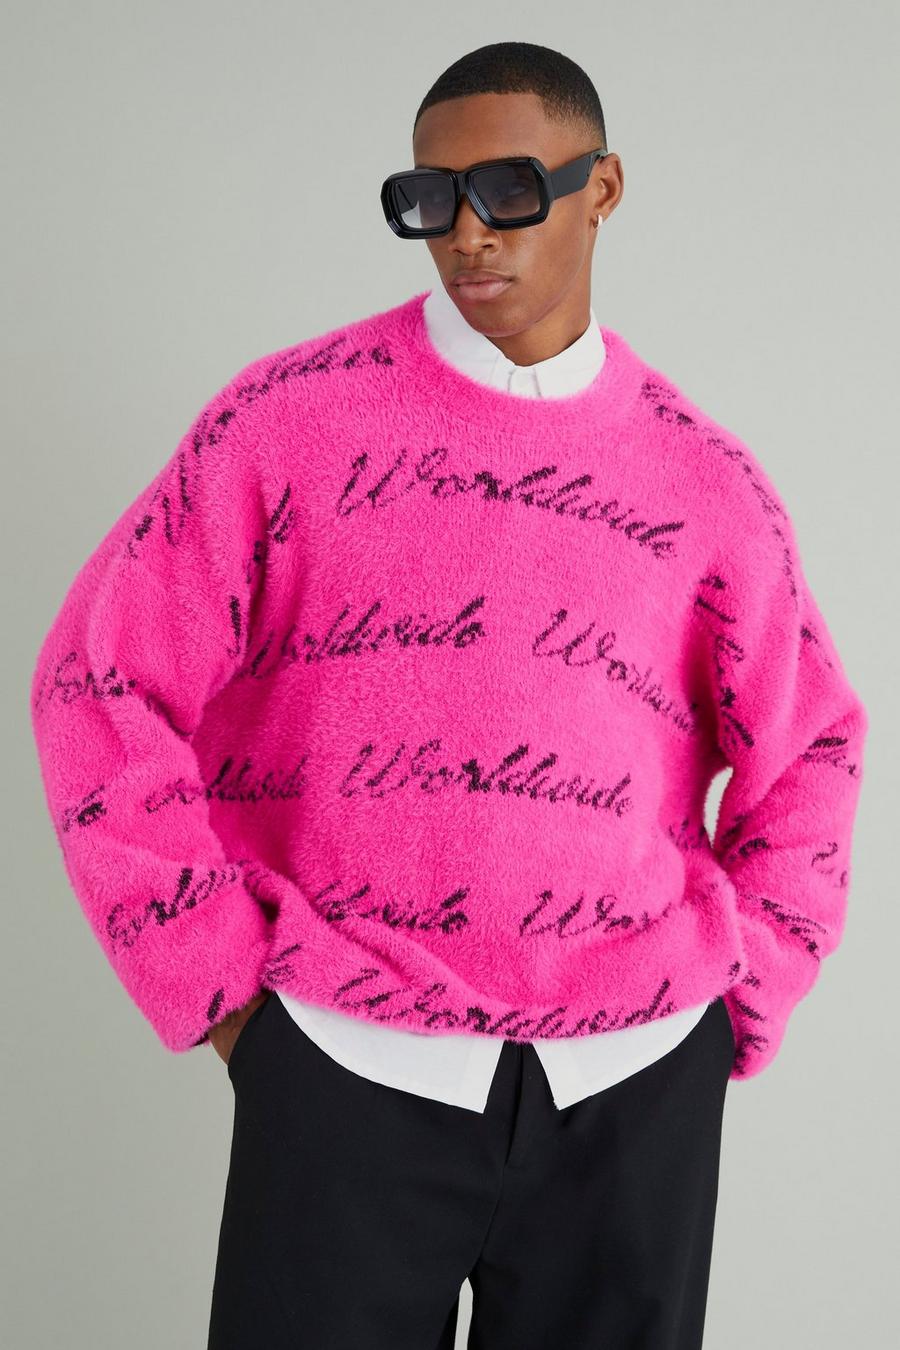 Hot pink Oversized Fluffy Worldwide Knitted Jumper